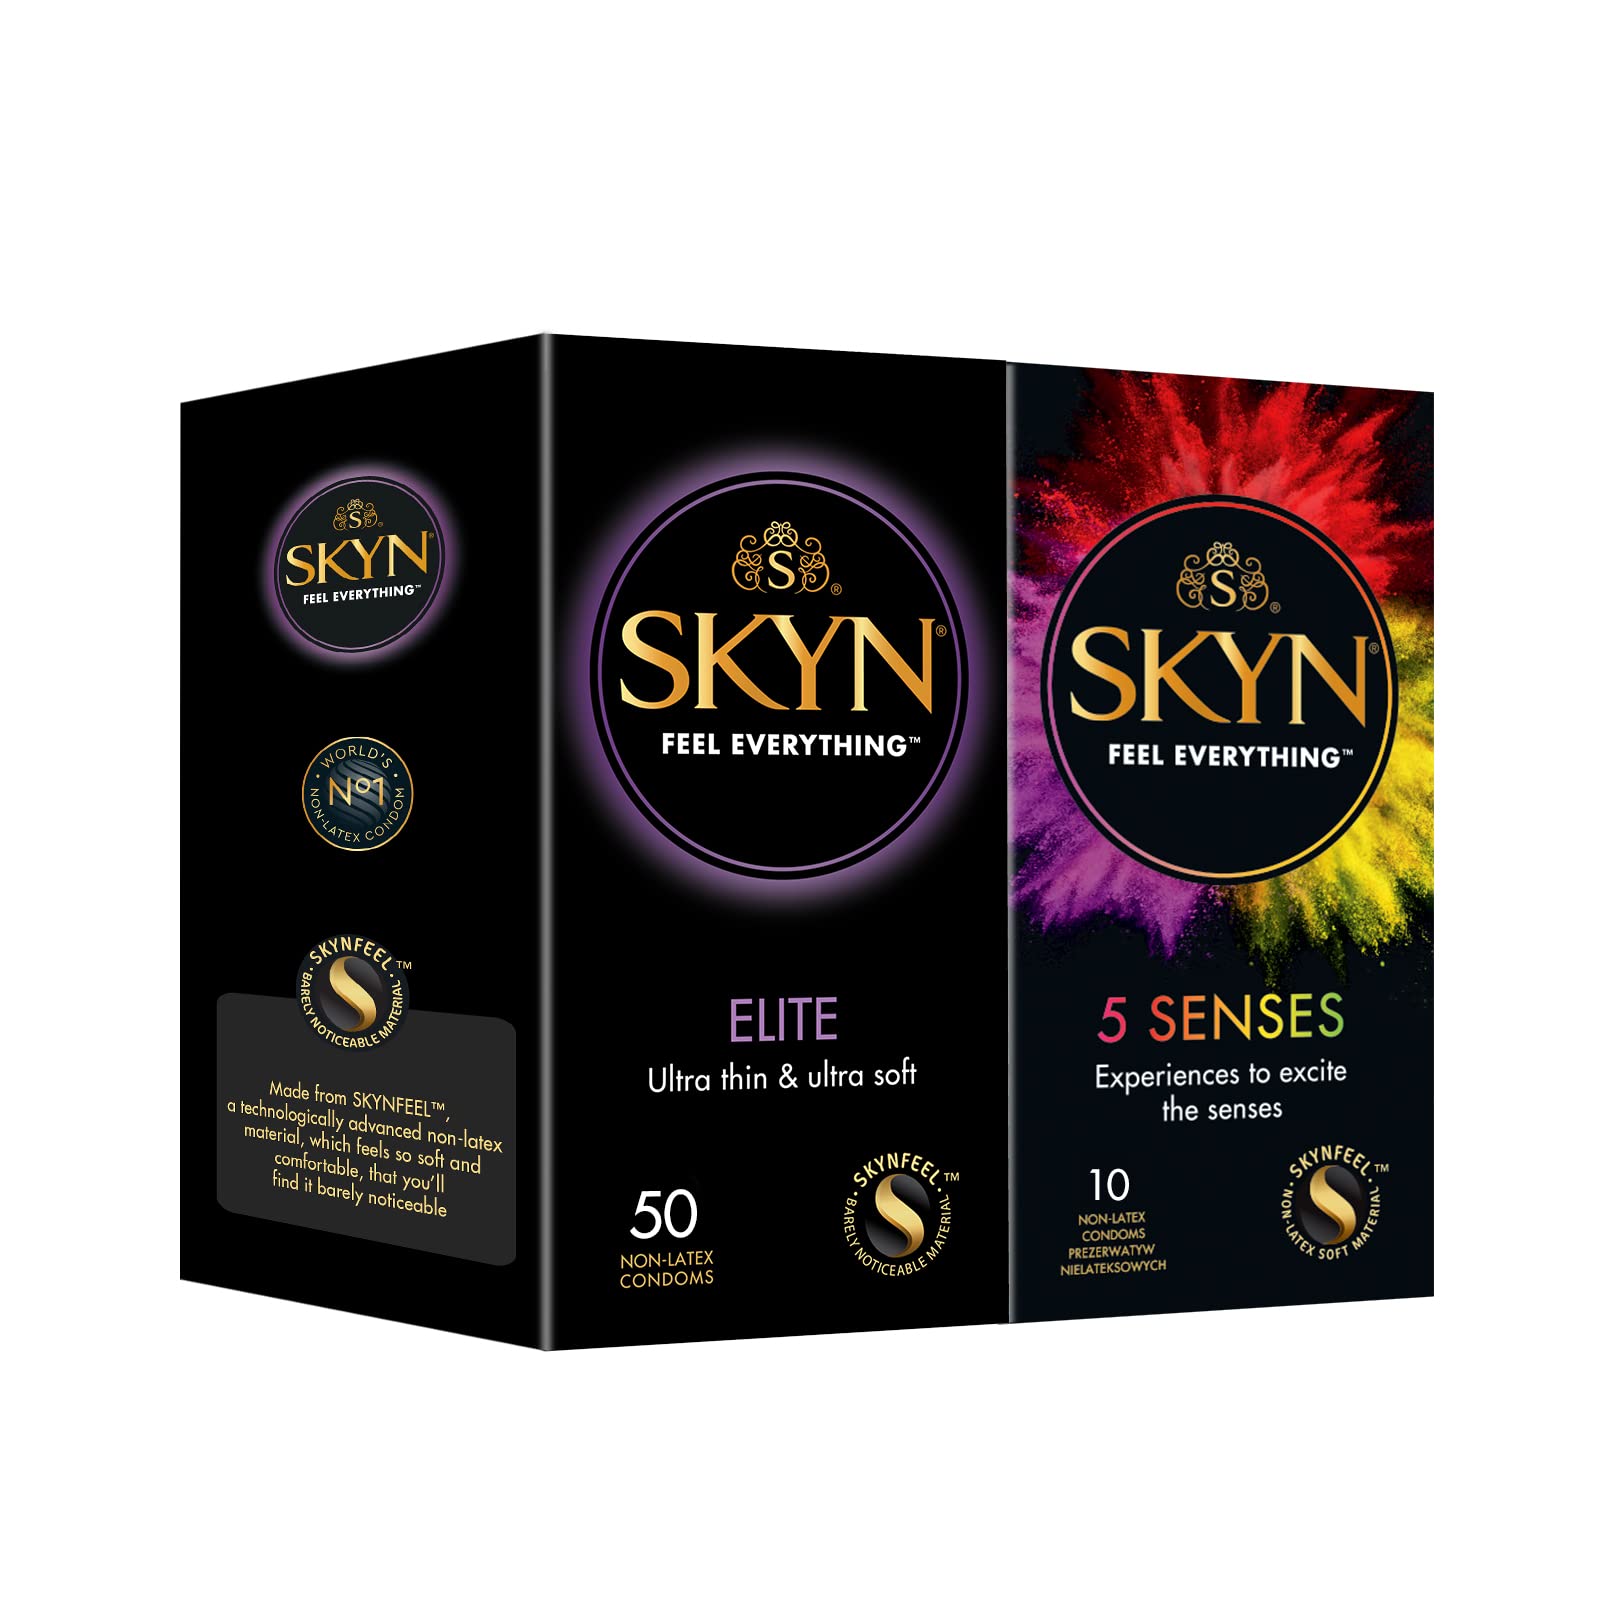 SKYN Elite Kondome (50 Stück) & 5 Senses Kondome (10 Stück) Latexfreie, verendbar mit unser Lube